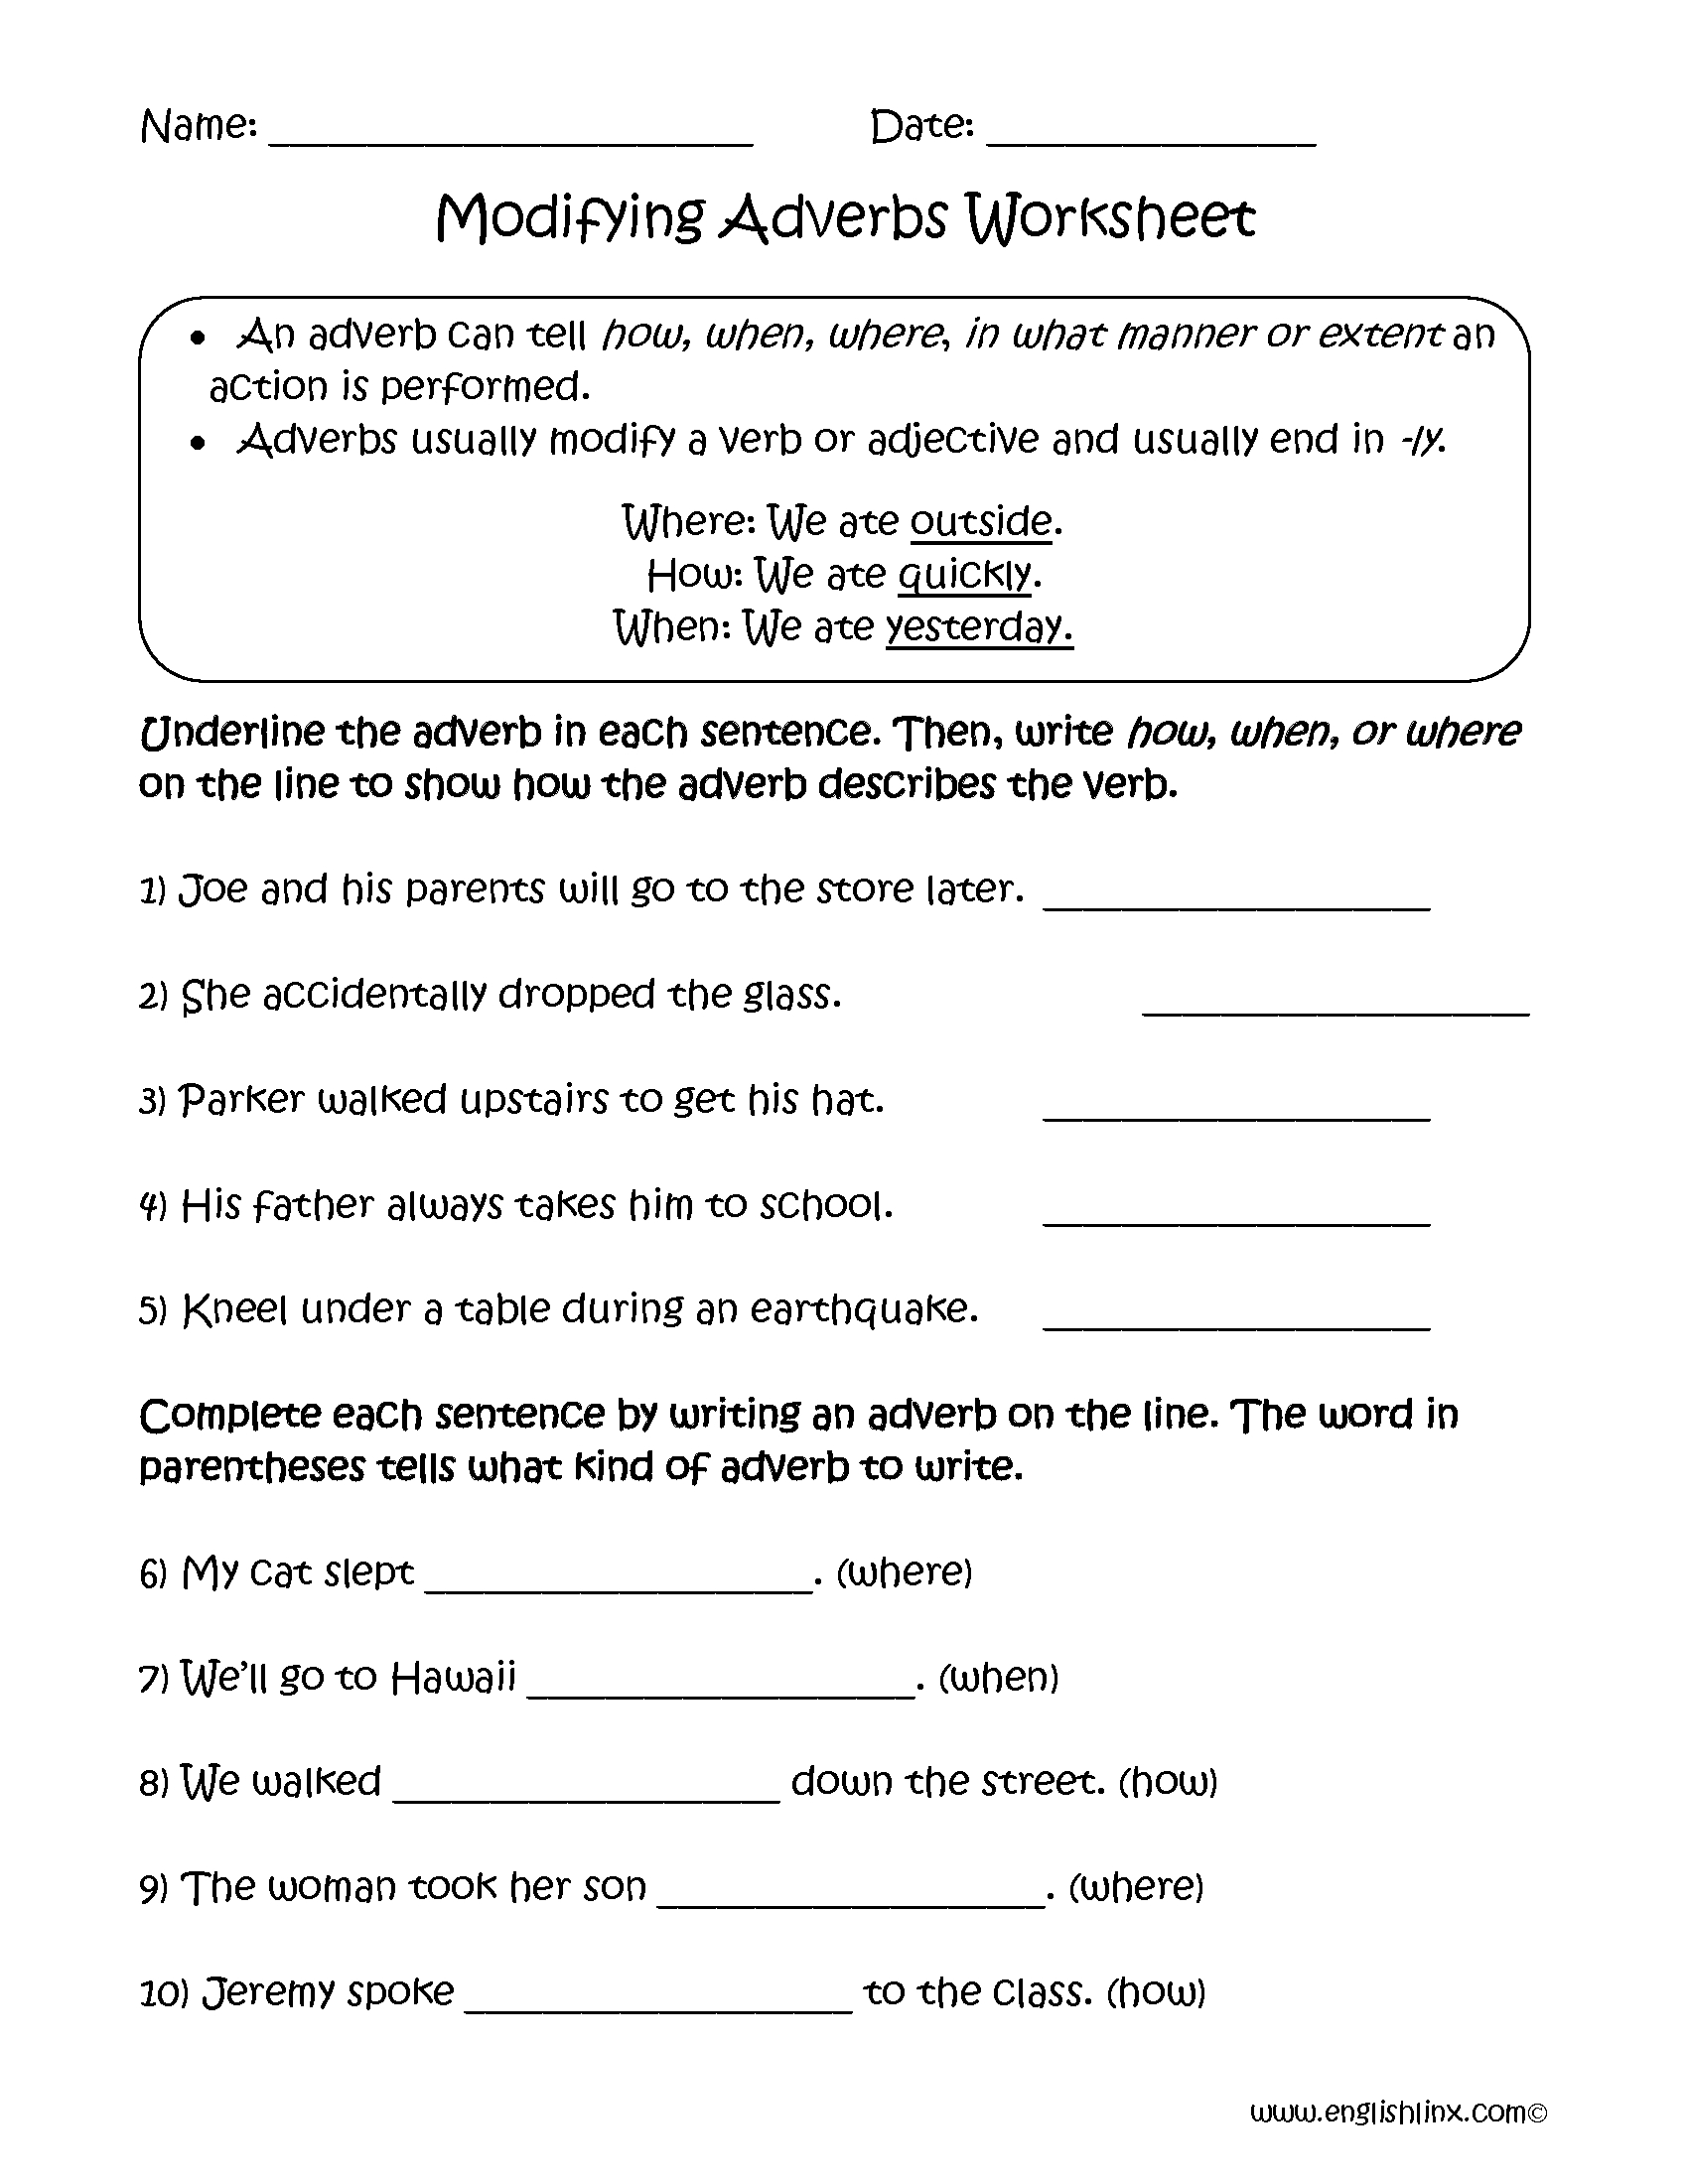 kinds-of-adverbs-worksheets-for-grade-5-worksheet-resume-examples-gambaran